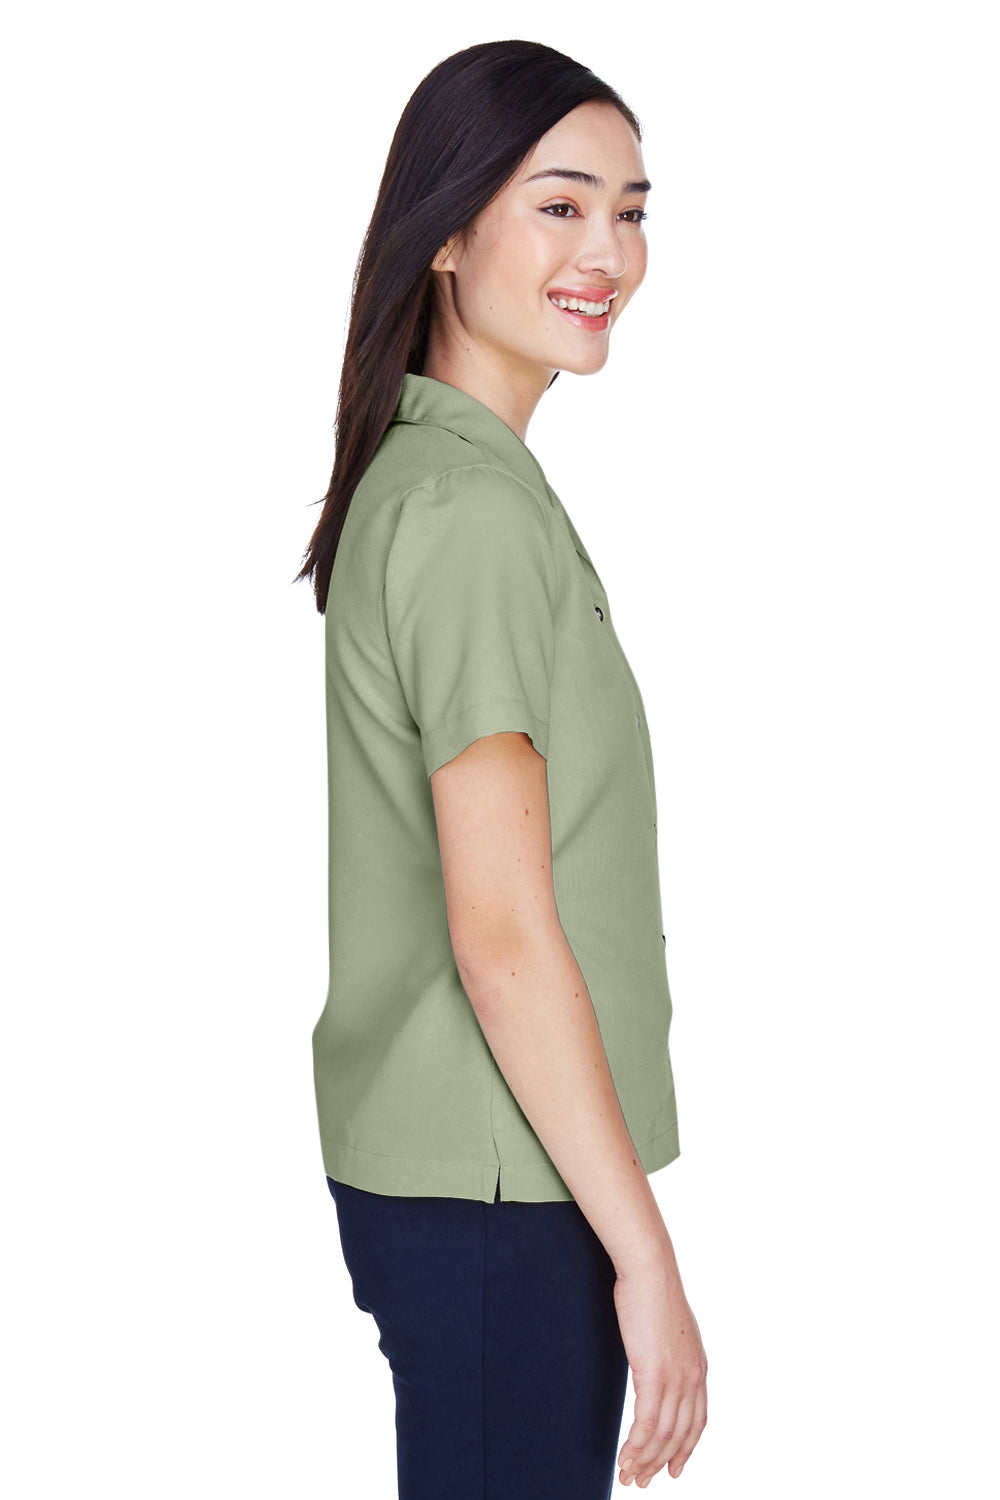 UltraClub 8981 Womens Cabana Breeze Short Sleeve Button Down Camp Shirt w/ Pocket Sage Green Side